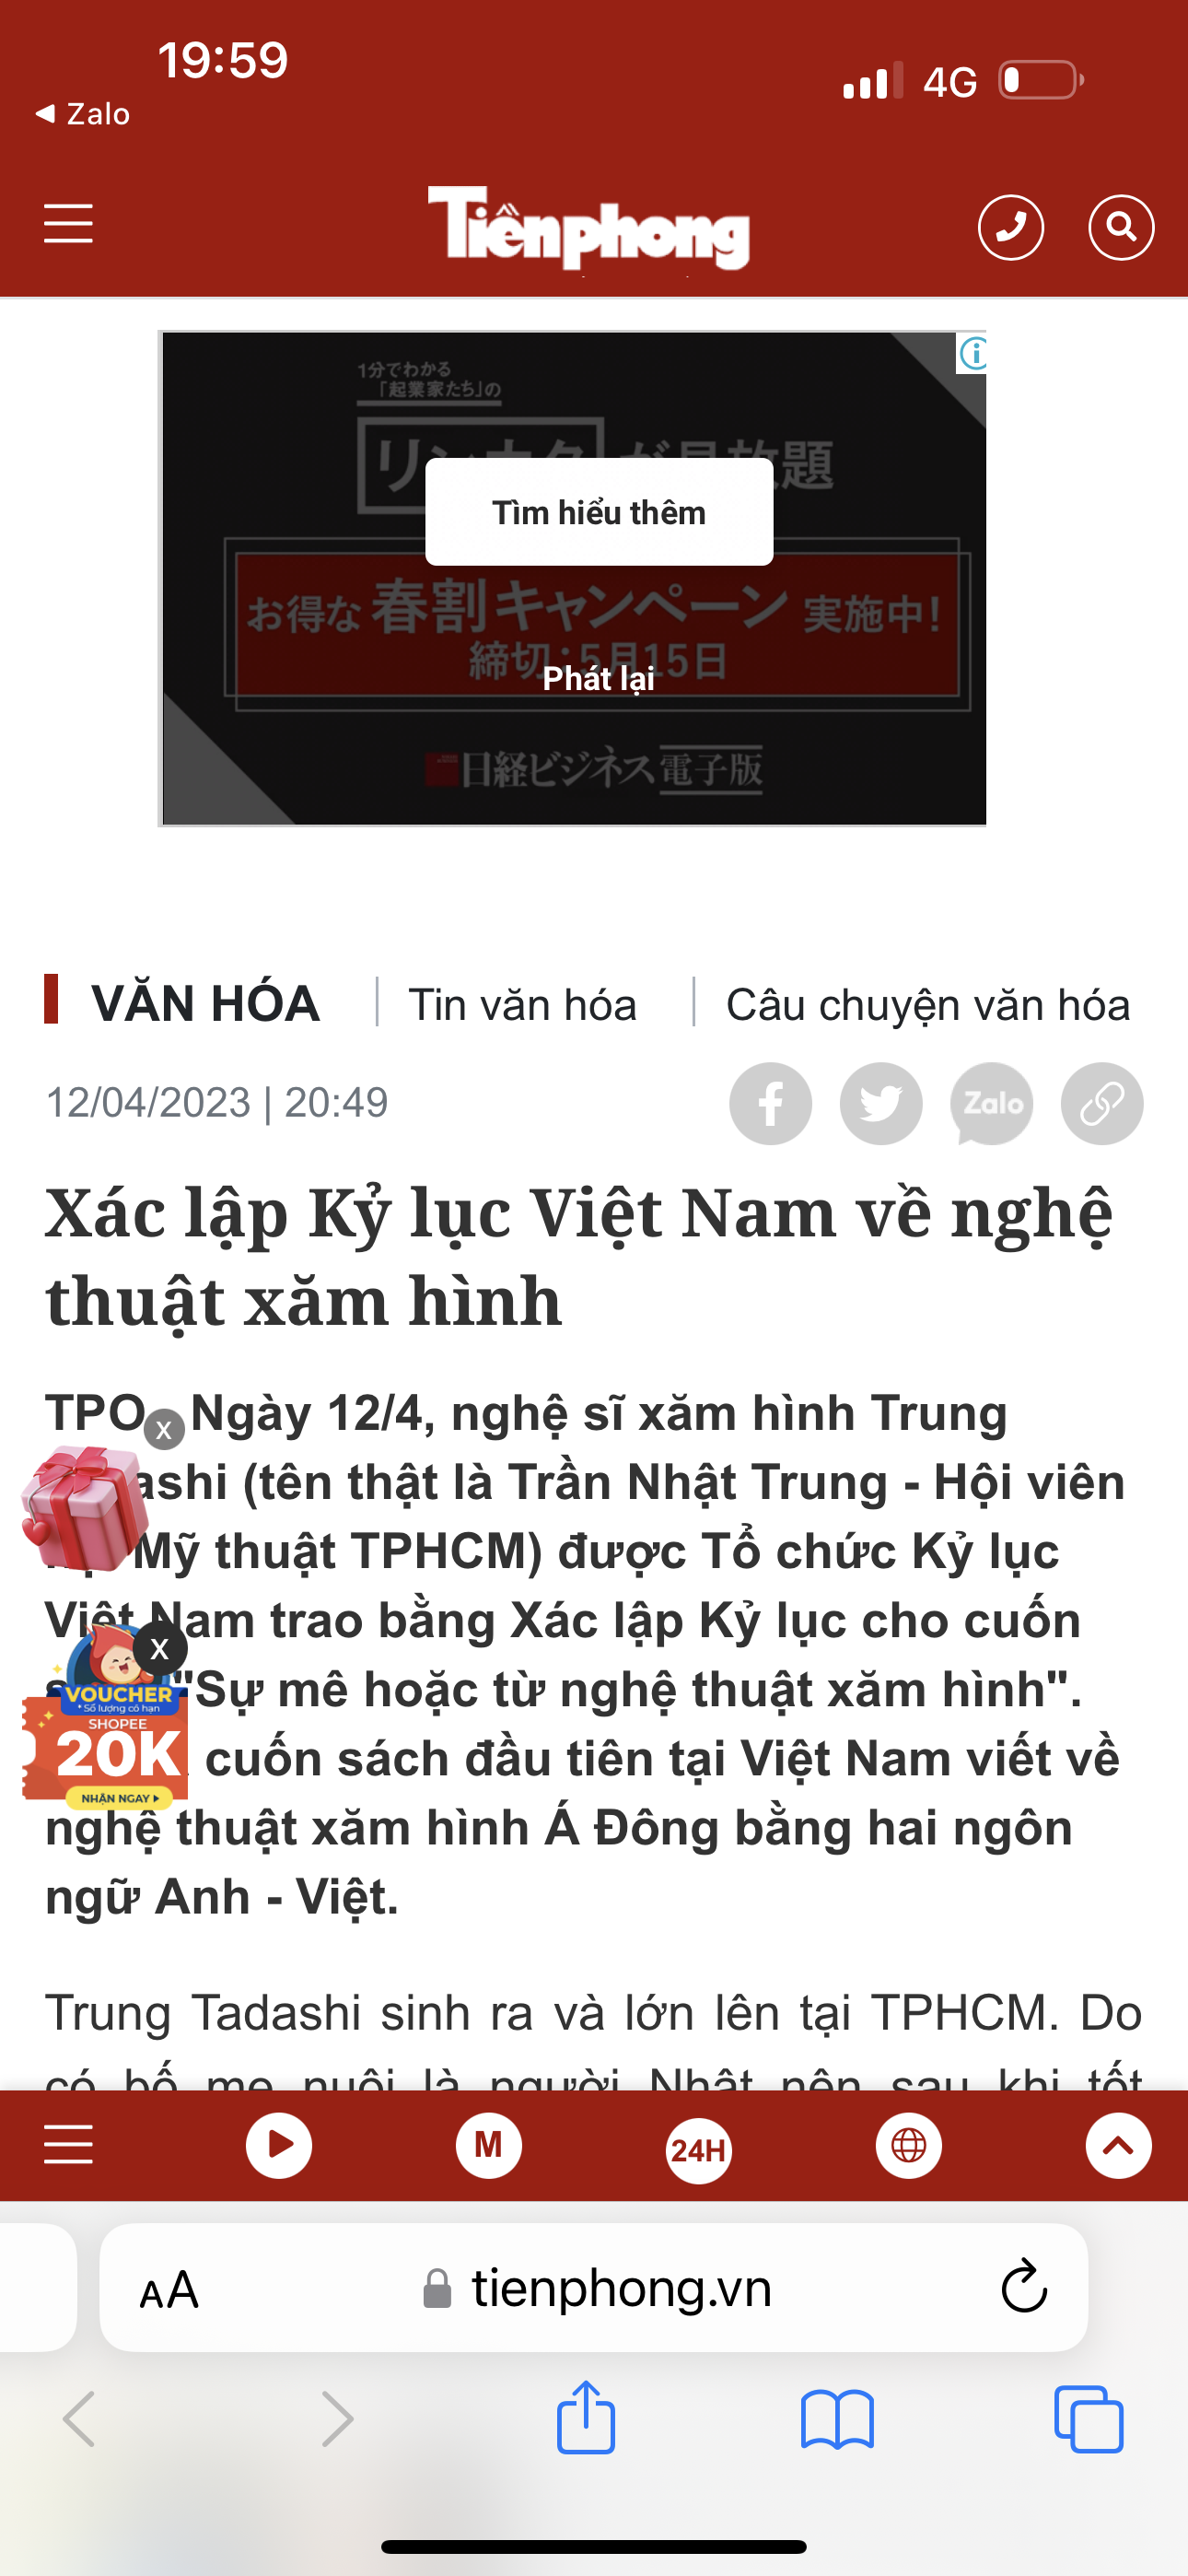 Tien Phong online newspaper